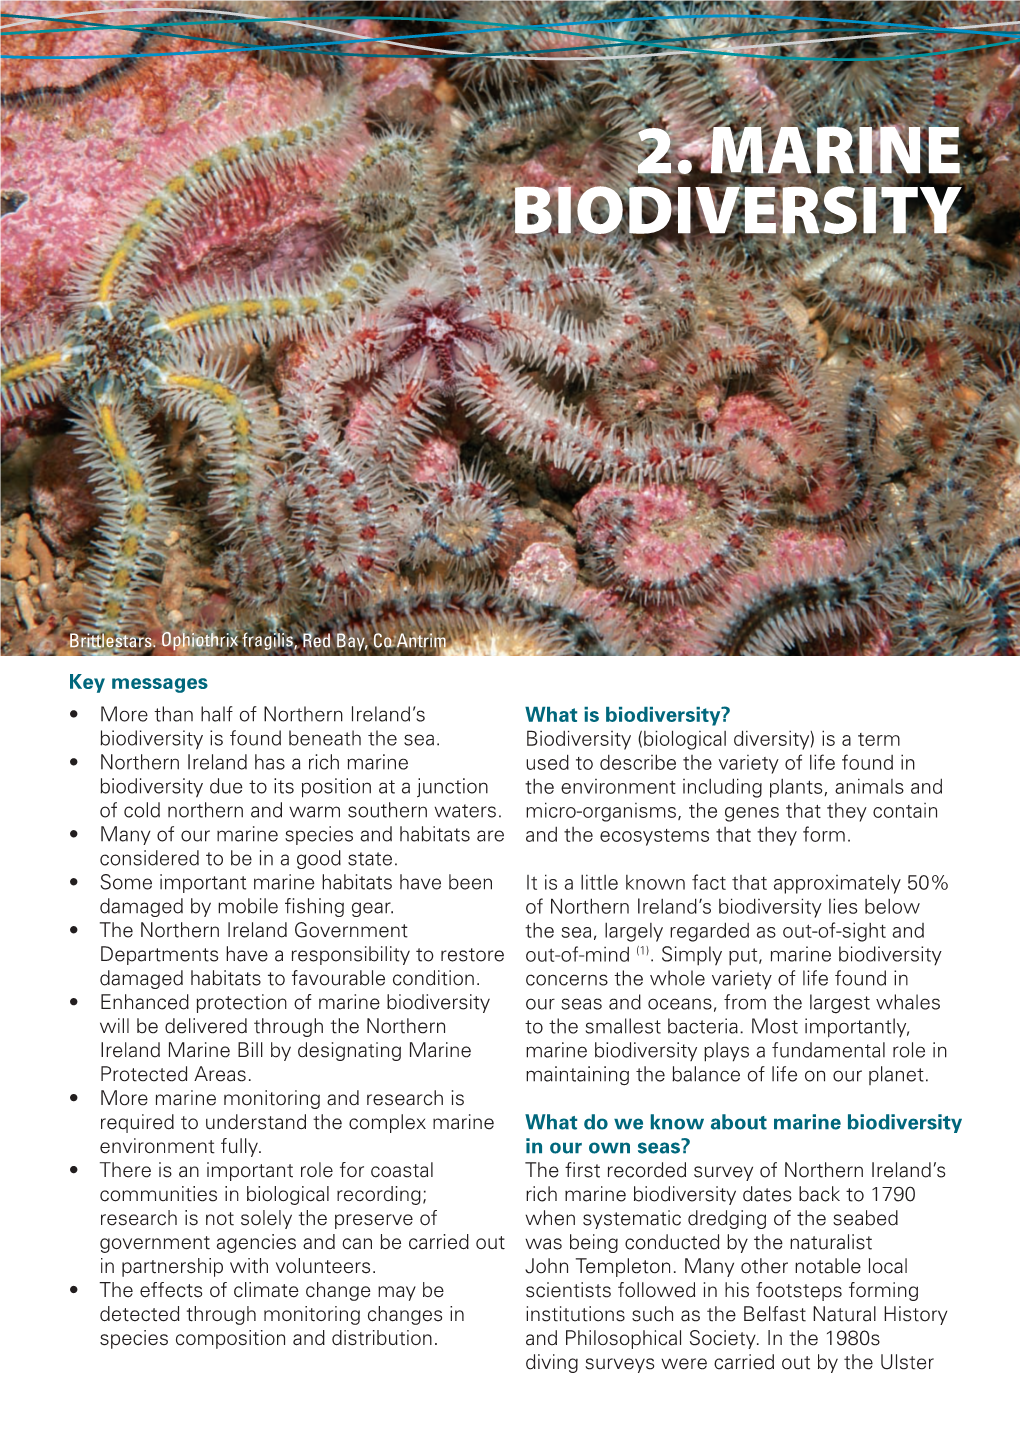 2. Marine Biodiversity